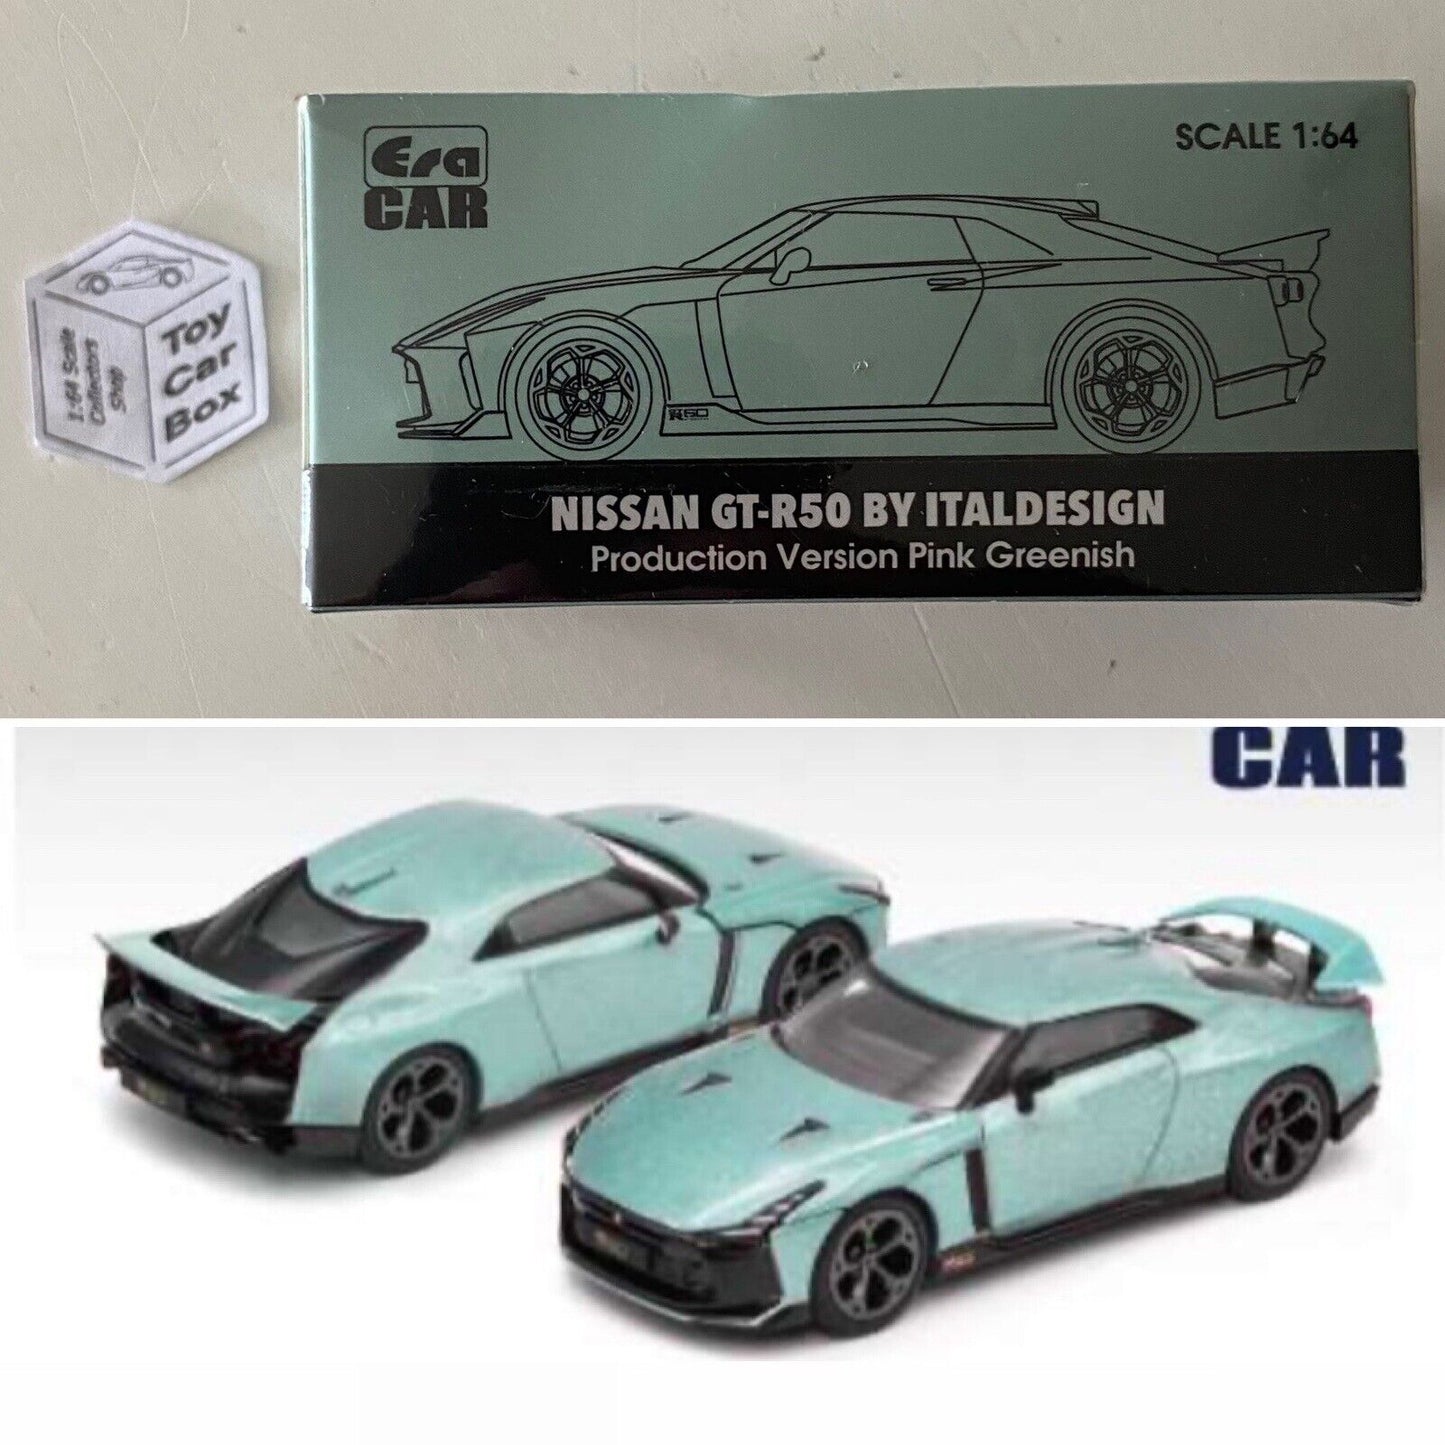 ERA CAR - Nissan GT-R50 By Italdesign (1:64 Scale - Pink Greenish - Boxed) J63g